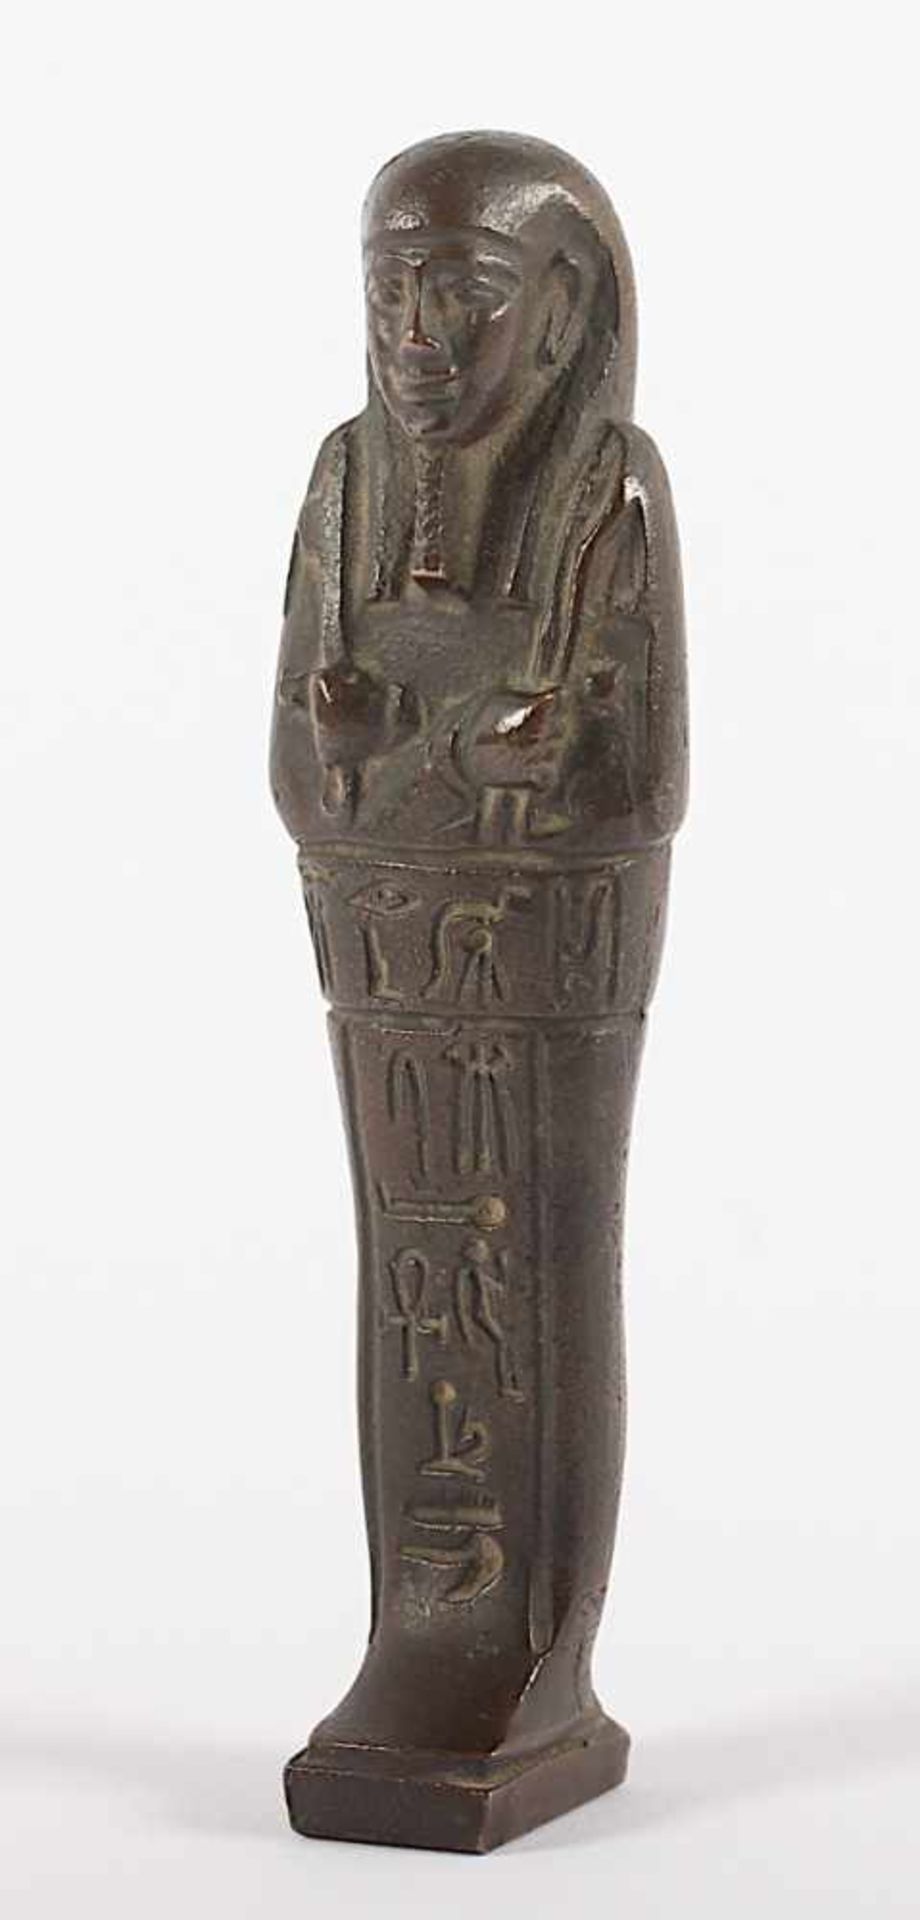 FIGURALE PETSCHAFT, Bronze, ägyptisierend, L 11,5, Siegelfläche graviert Monogramm MS, 20.Jh.